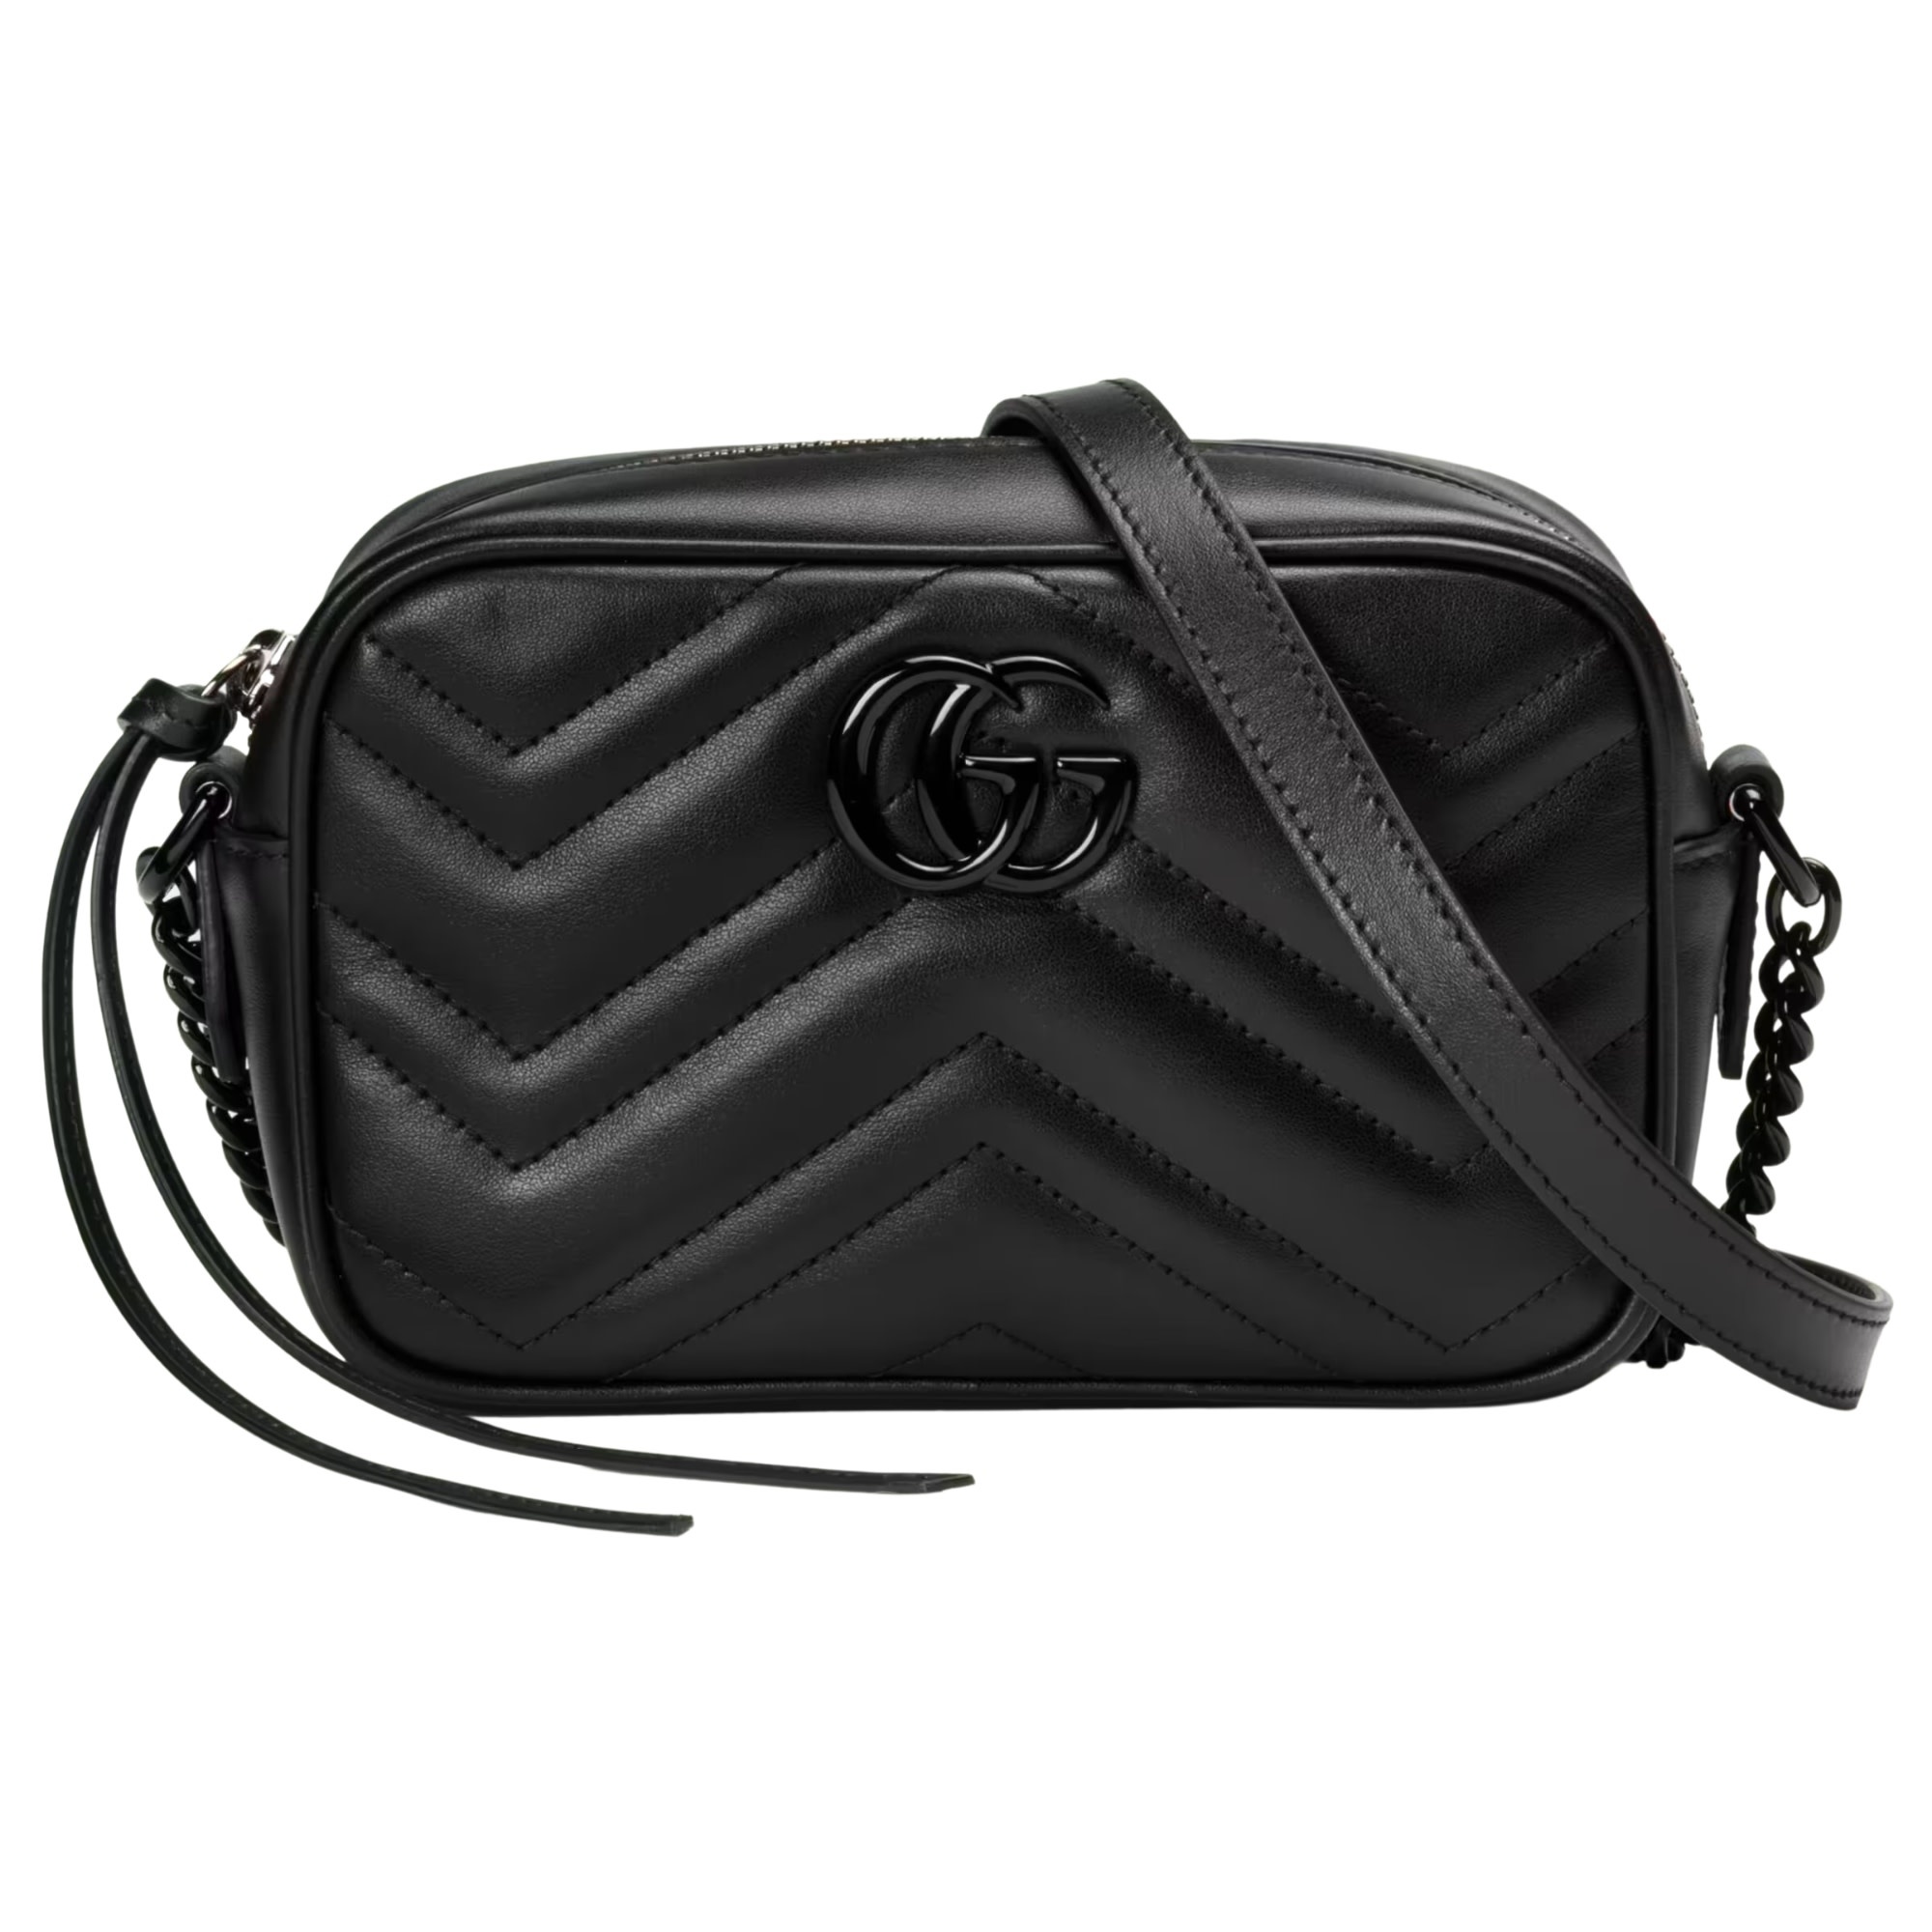 Black Leather GG Marmont Mini Bag